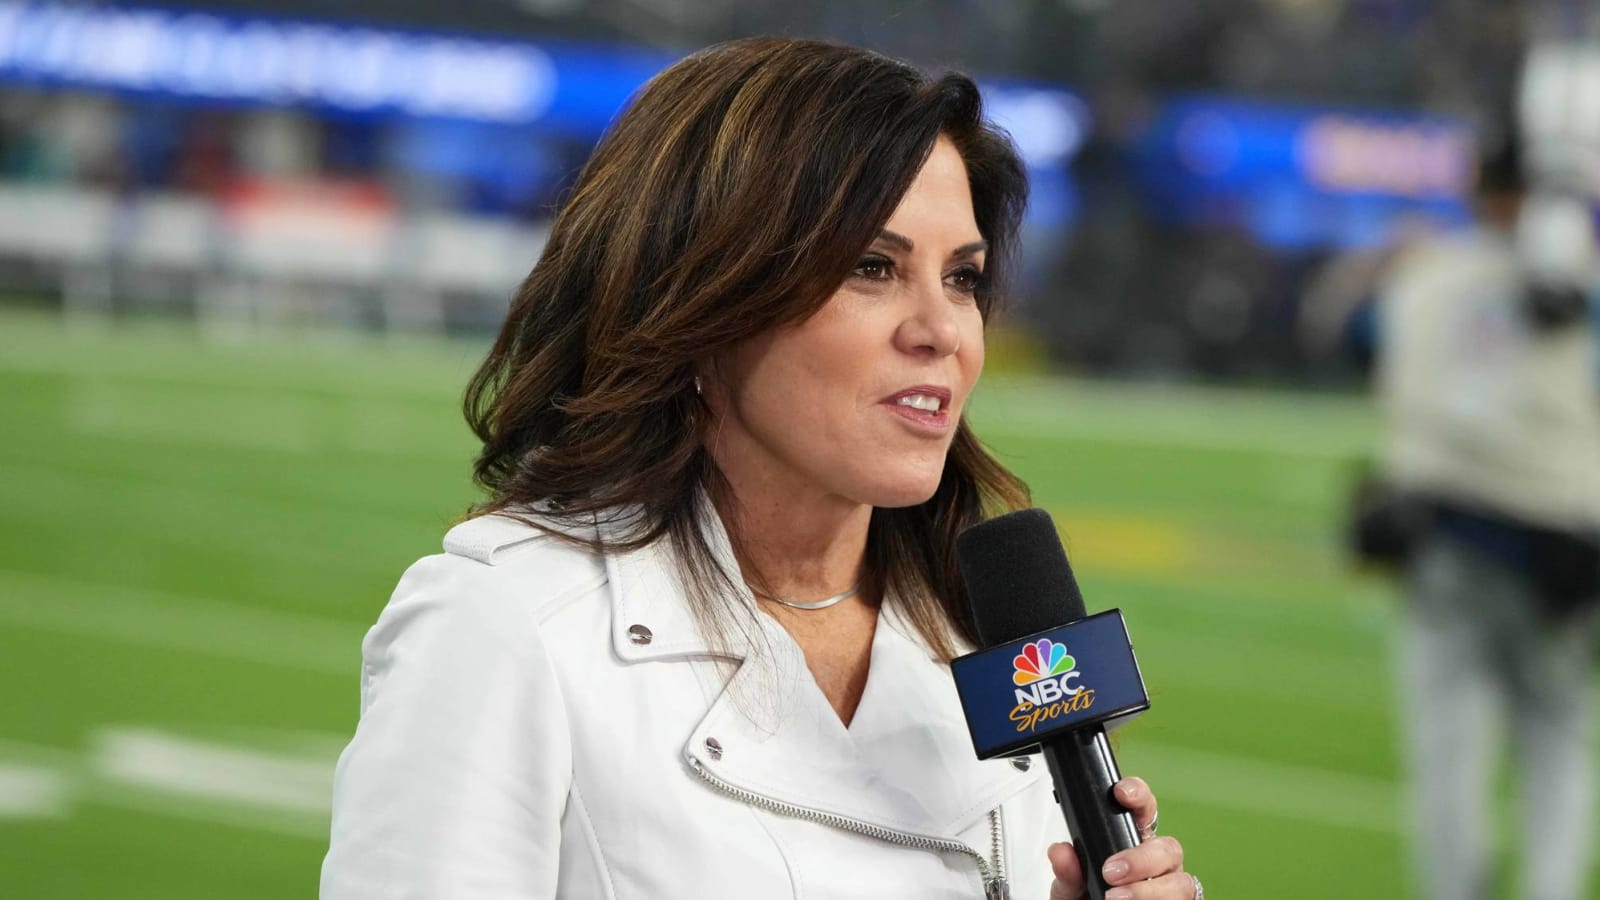 NBC confirms Tafoya’s final game will be Super Bowl LVI